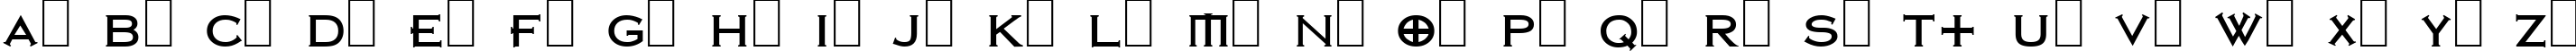 Пример написания английского алфавита шрифтом Nirvana Roman